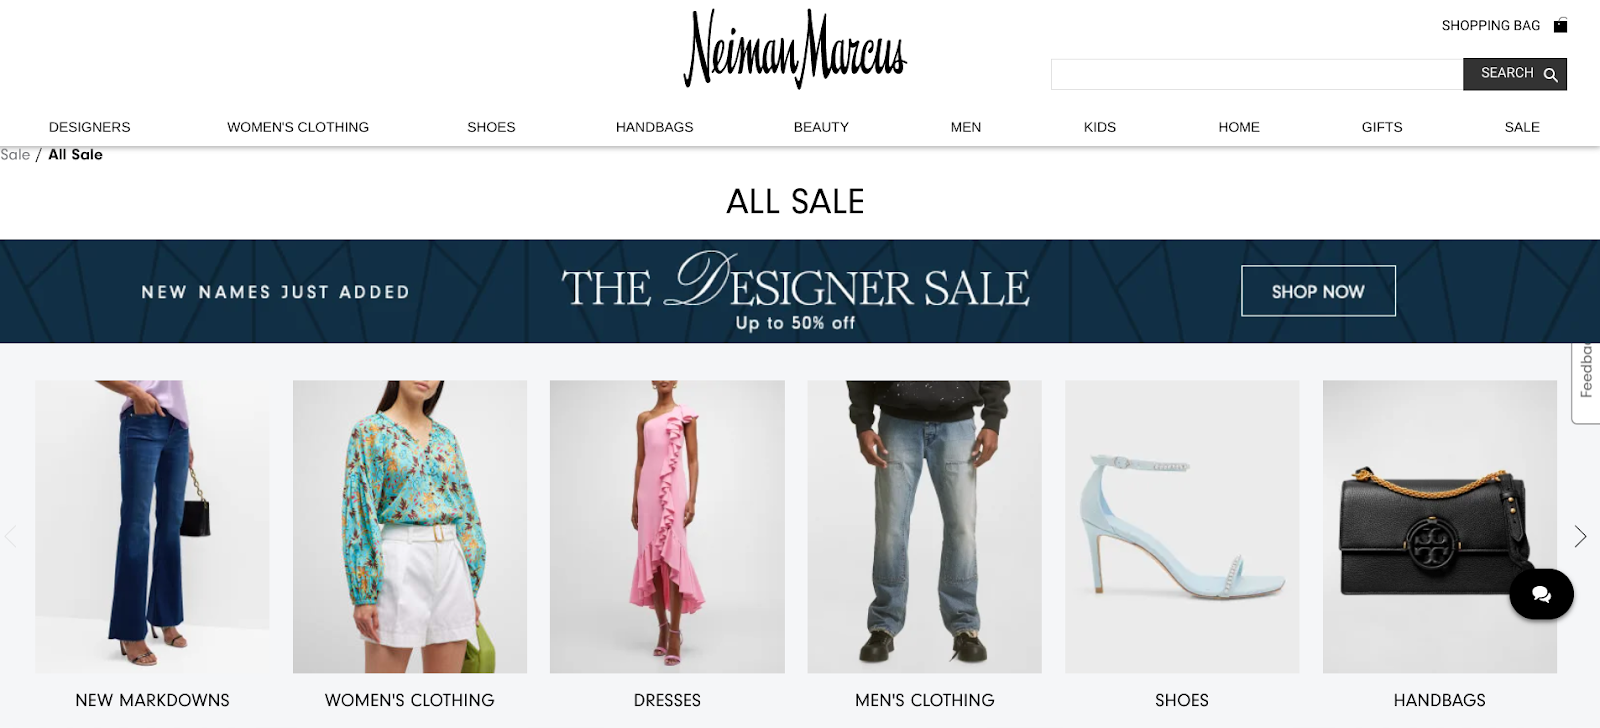 Designer Clothing - Buy Latest Designer Clothing Collection Online